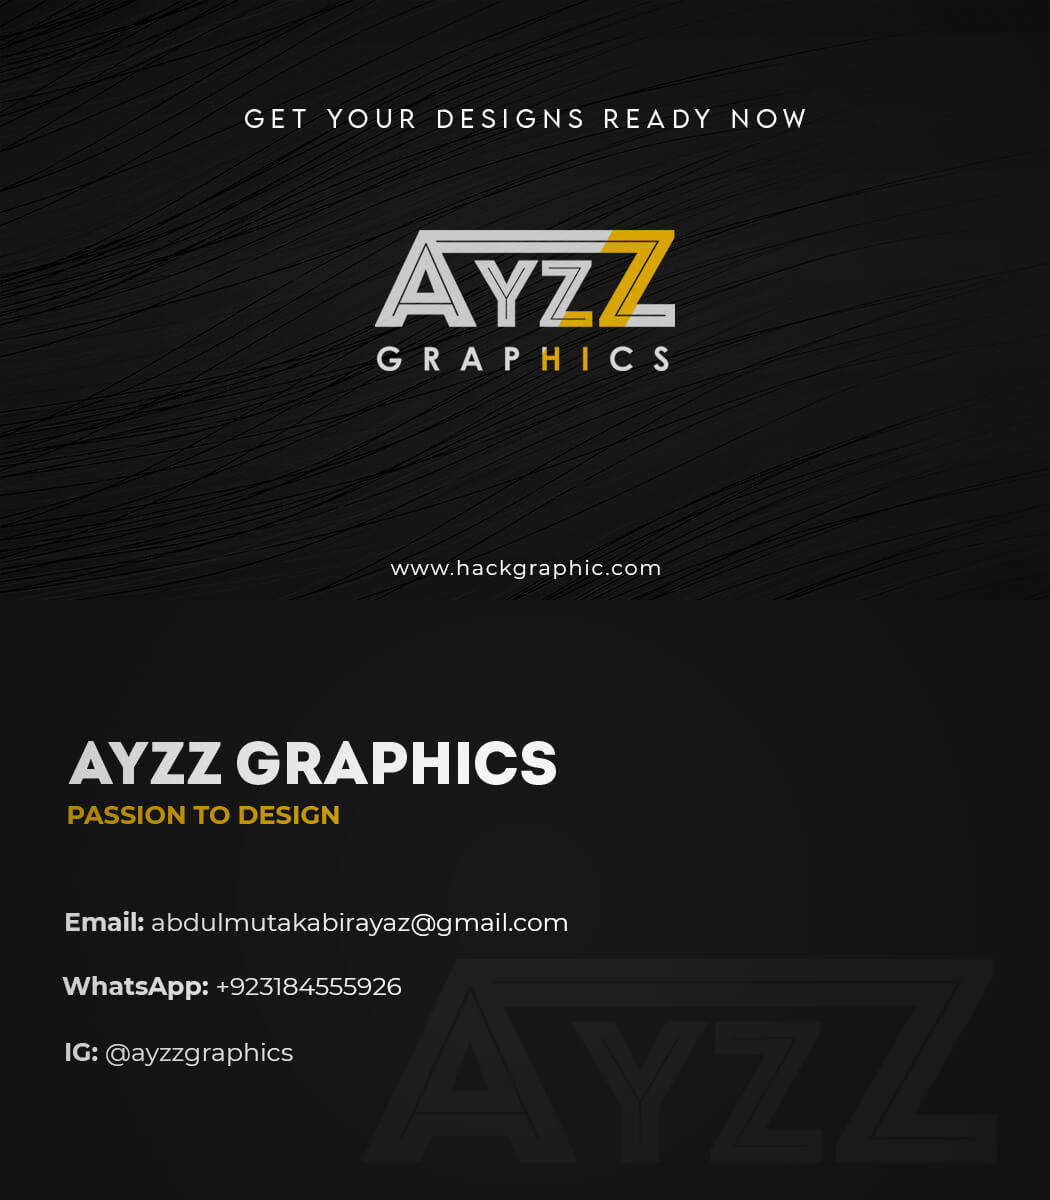 AyzzGraphics